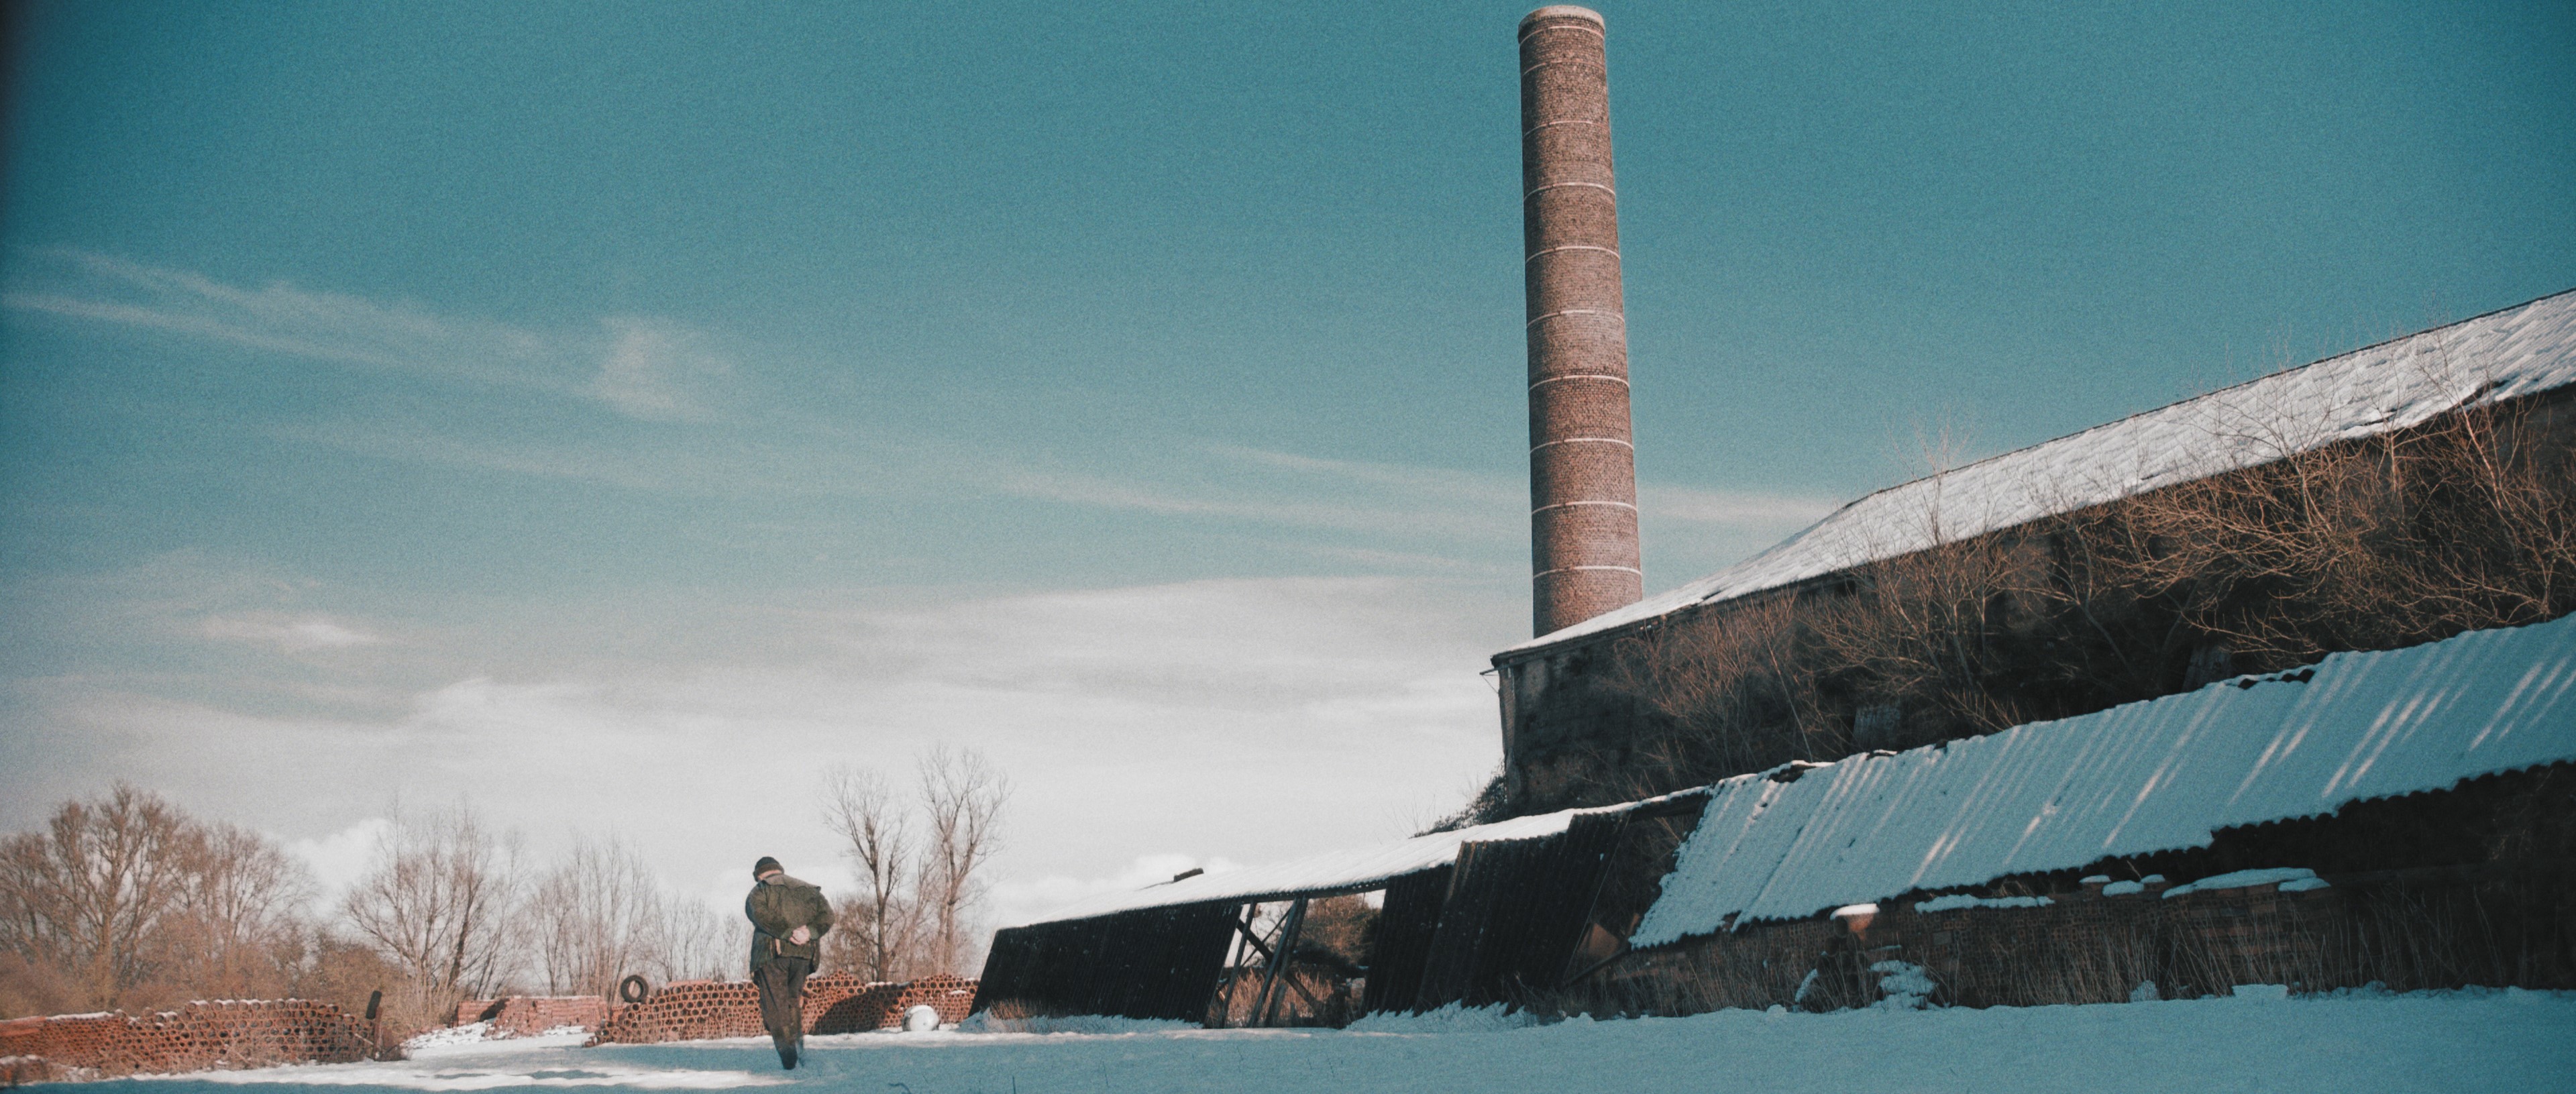 Steenbakkerij Dumoulin in sneeuwlandschap